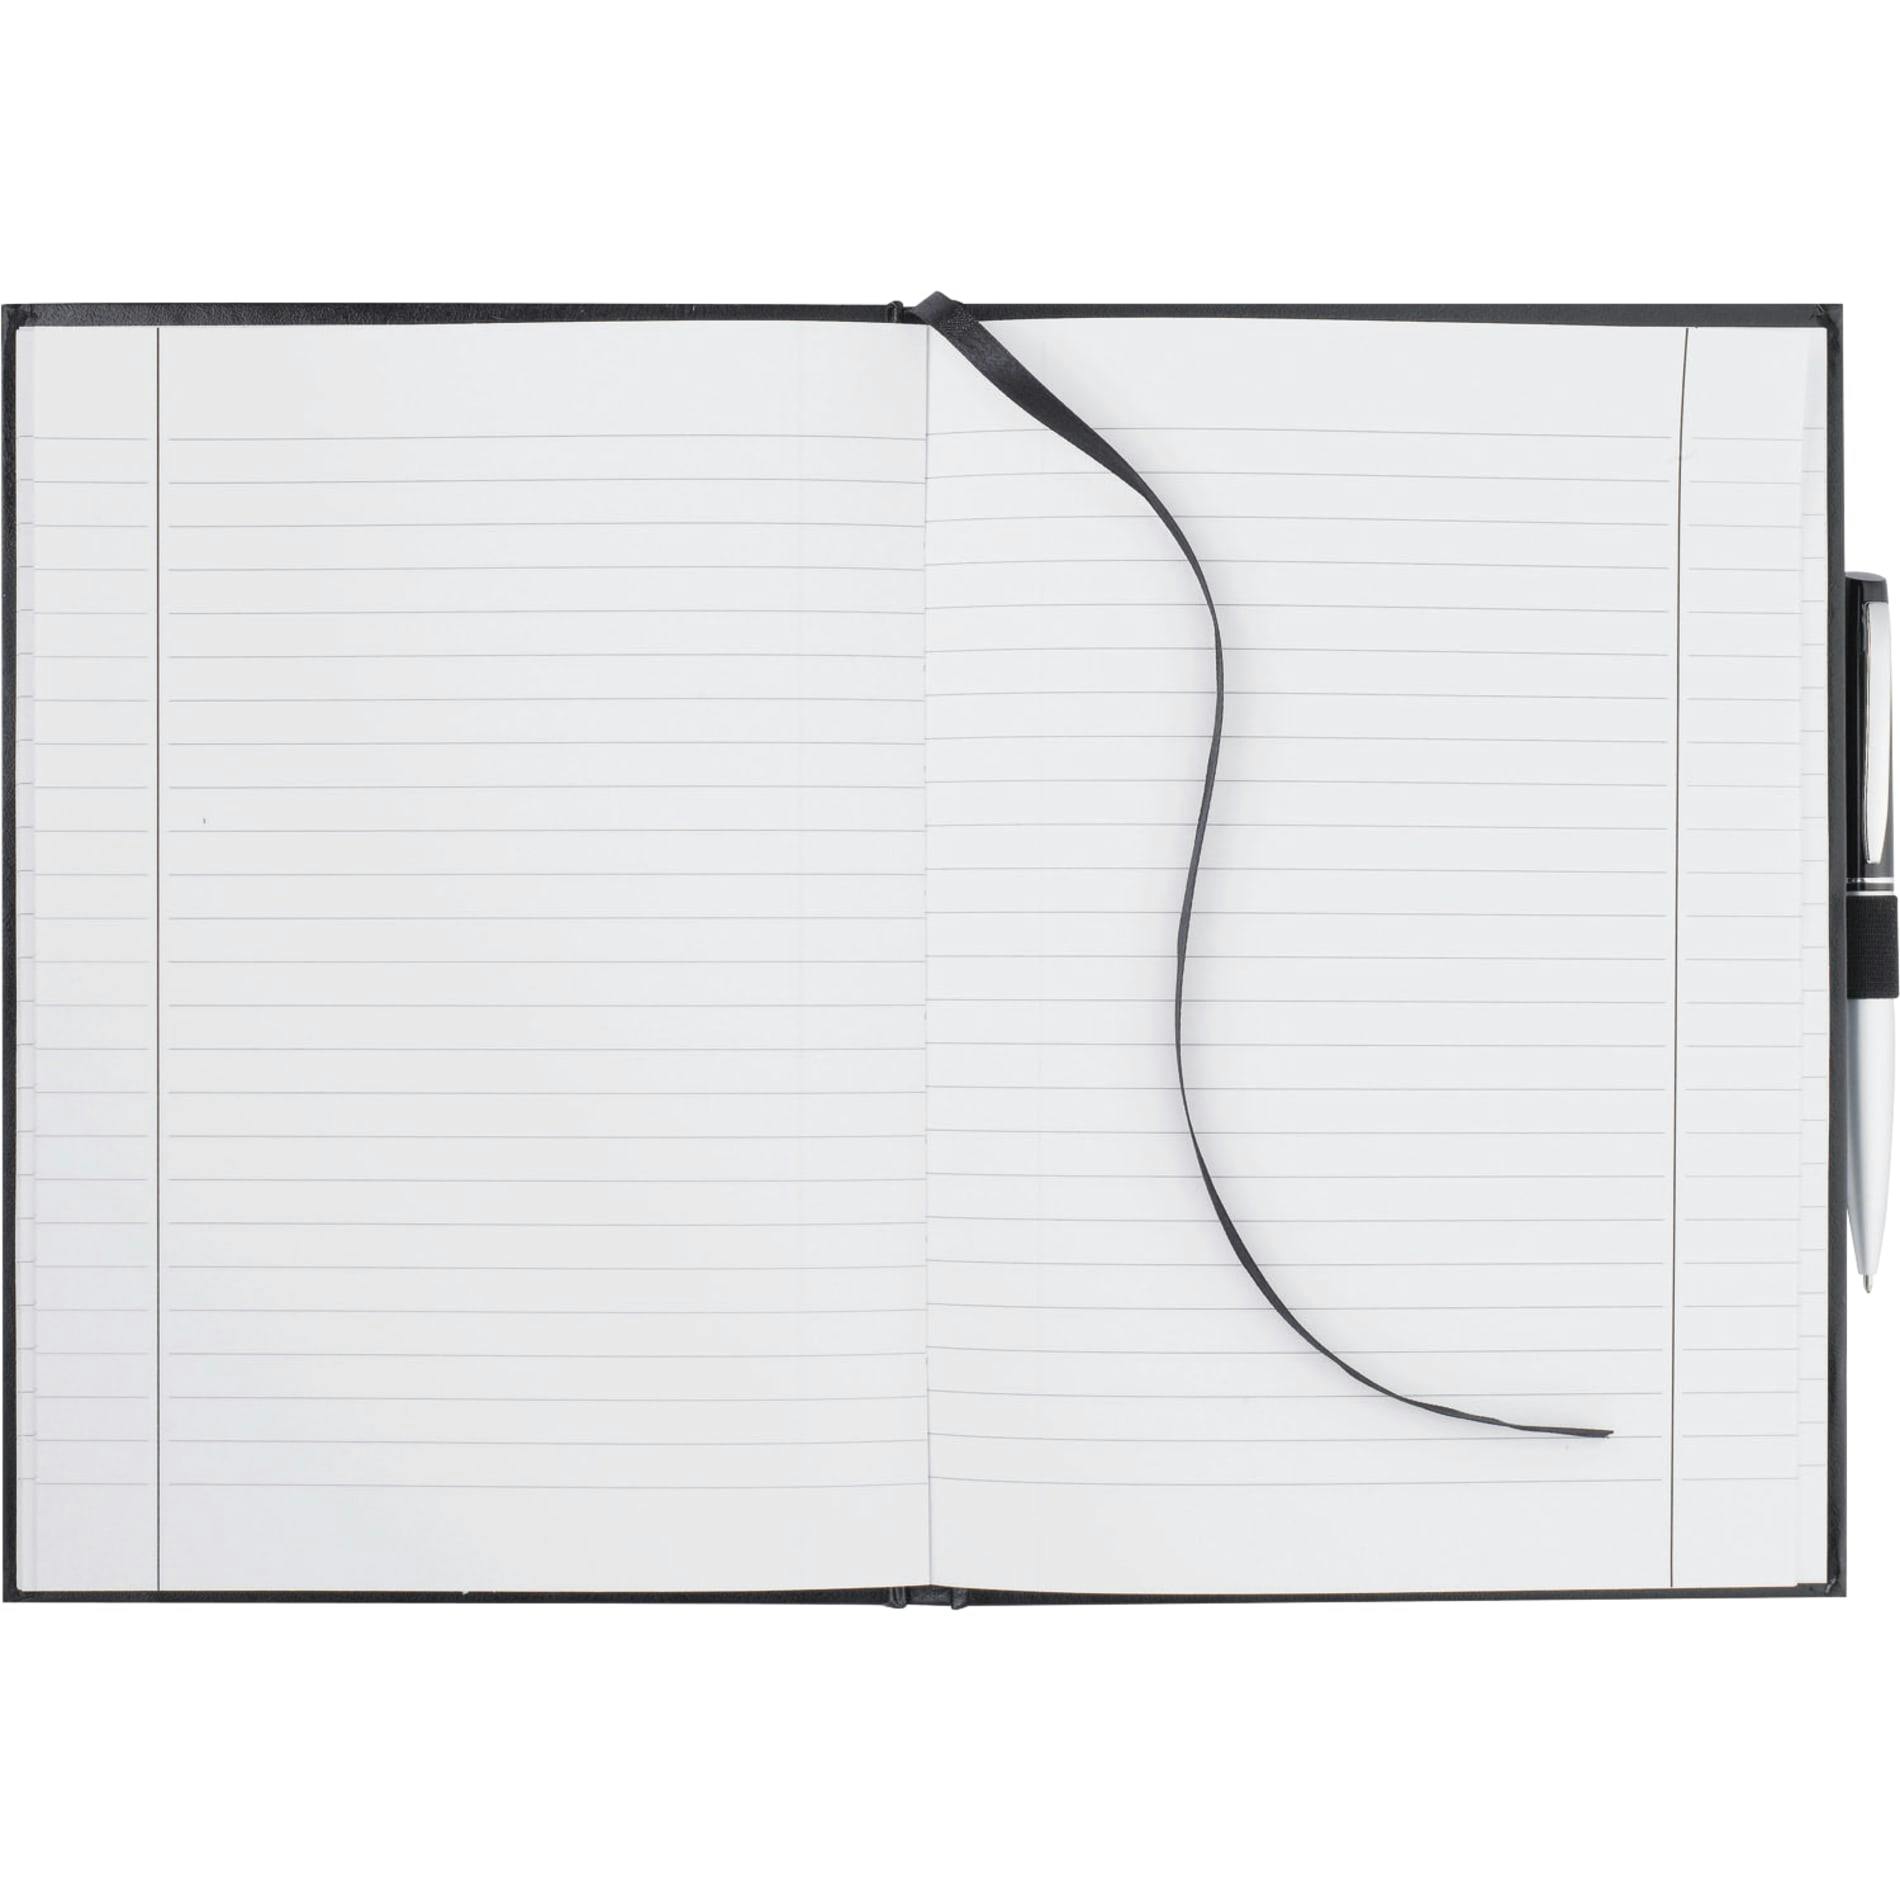 7" x 10" Executive Large Bound JournalBook® - additional Image 2